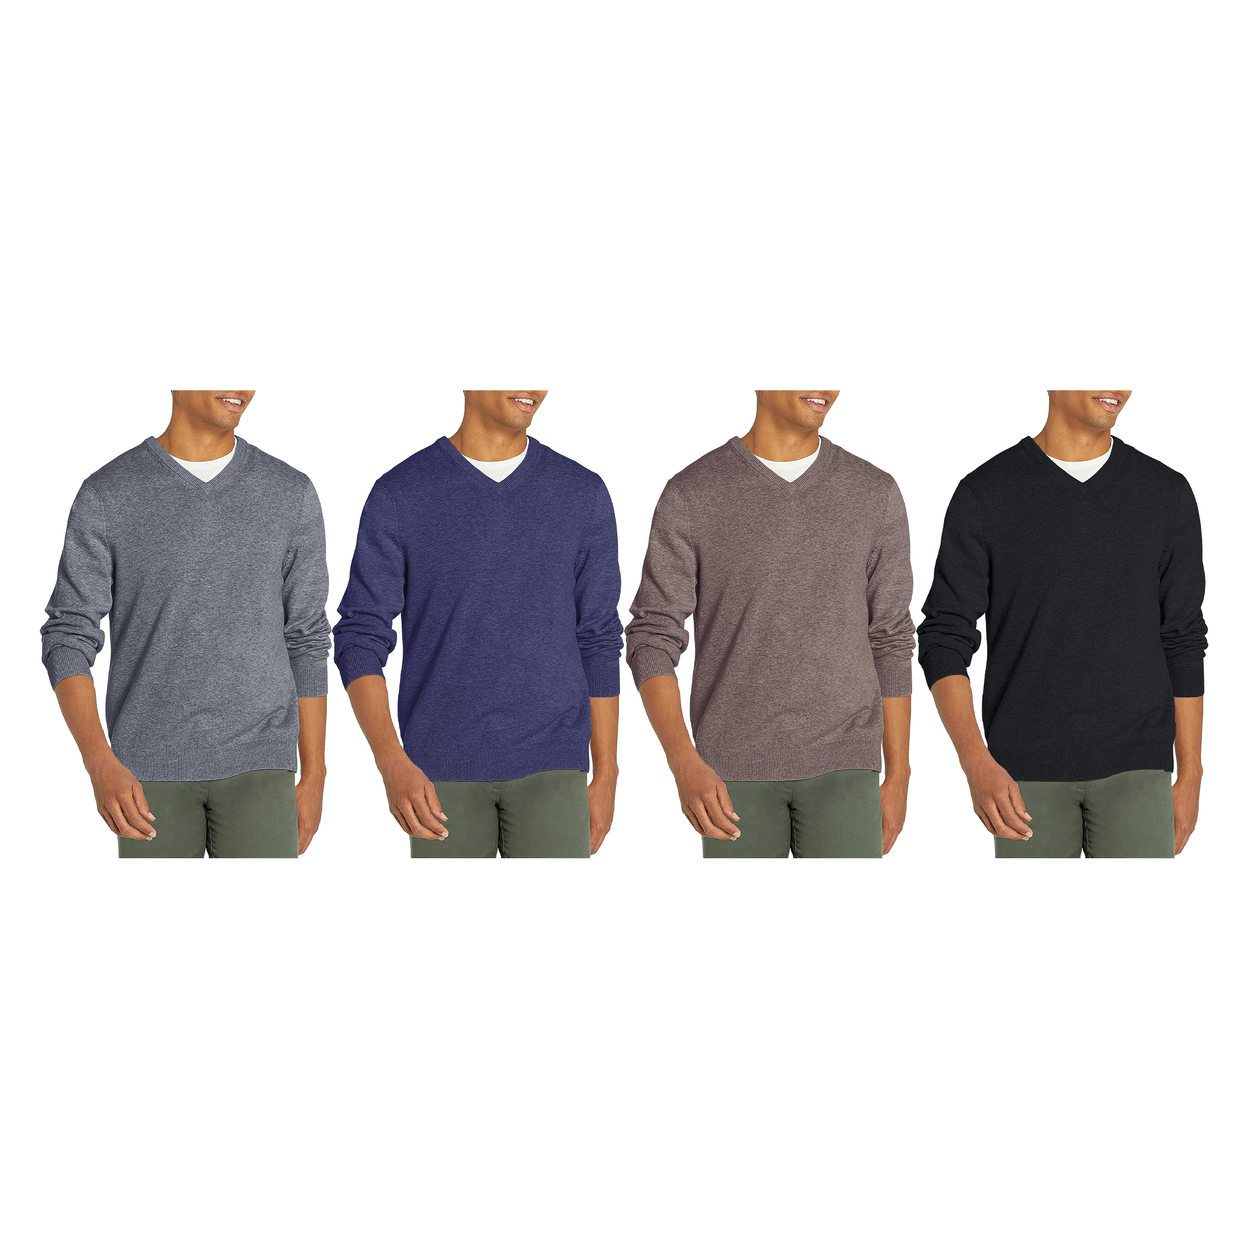 Men's Casual Ultra-Soft Slim Fit Warm Knit V-Neck Sweater - Black, Medium